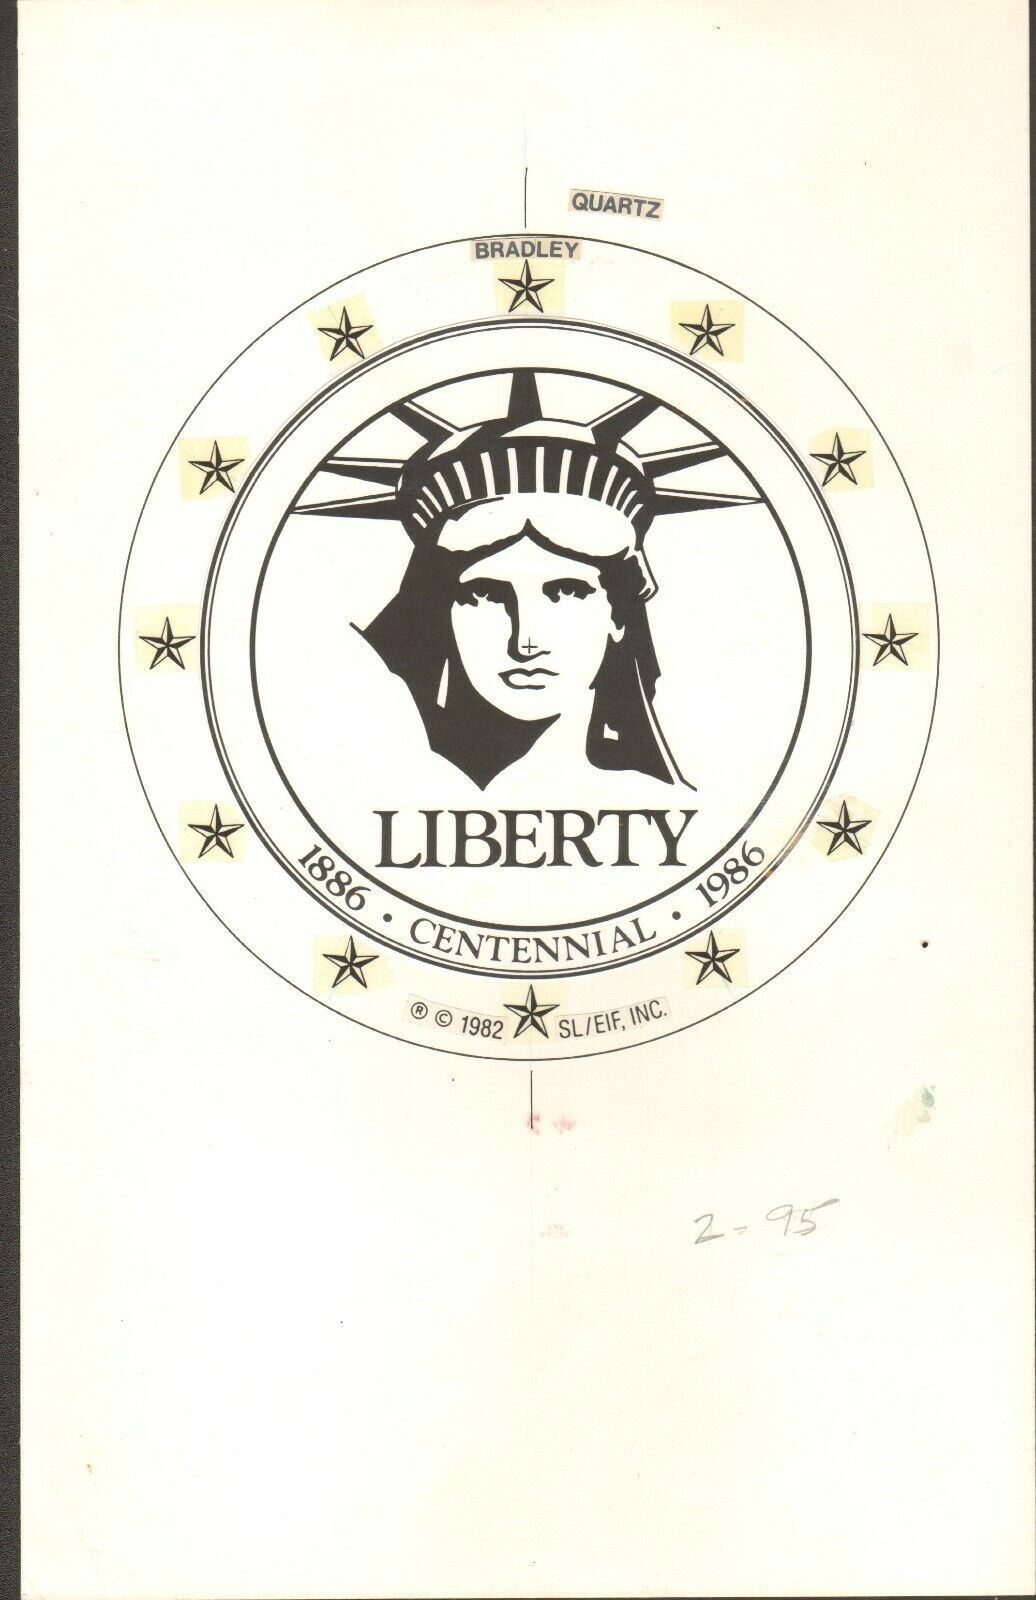 Original Bradley Statue of Liberty Centennial Round Quartz Watch Concept Art